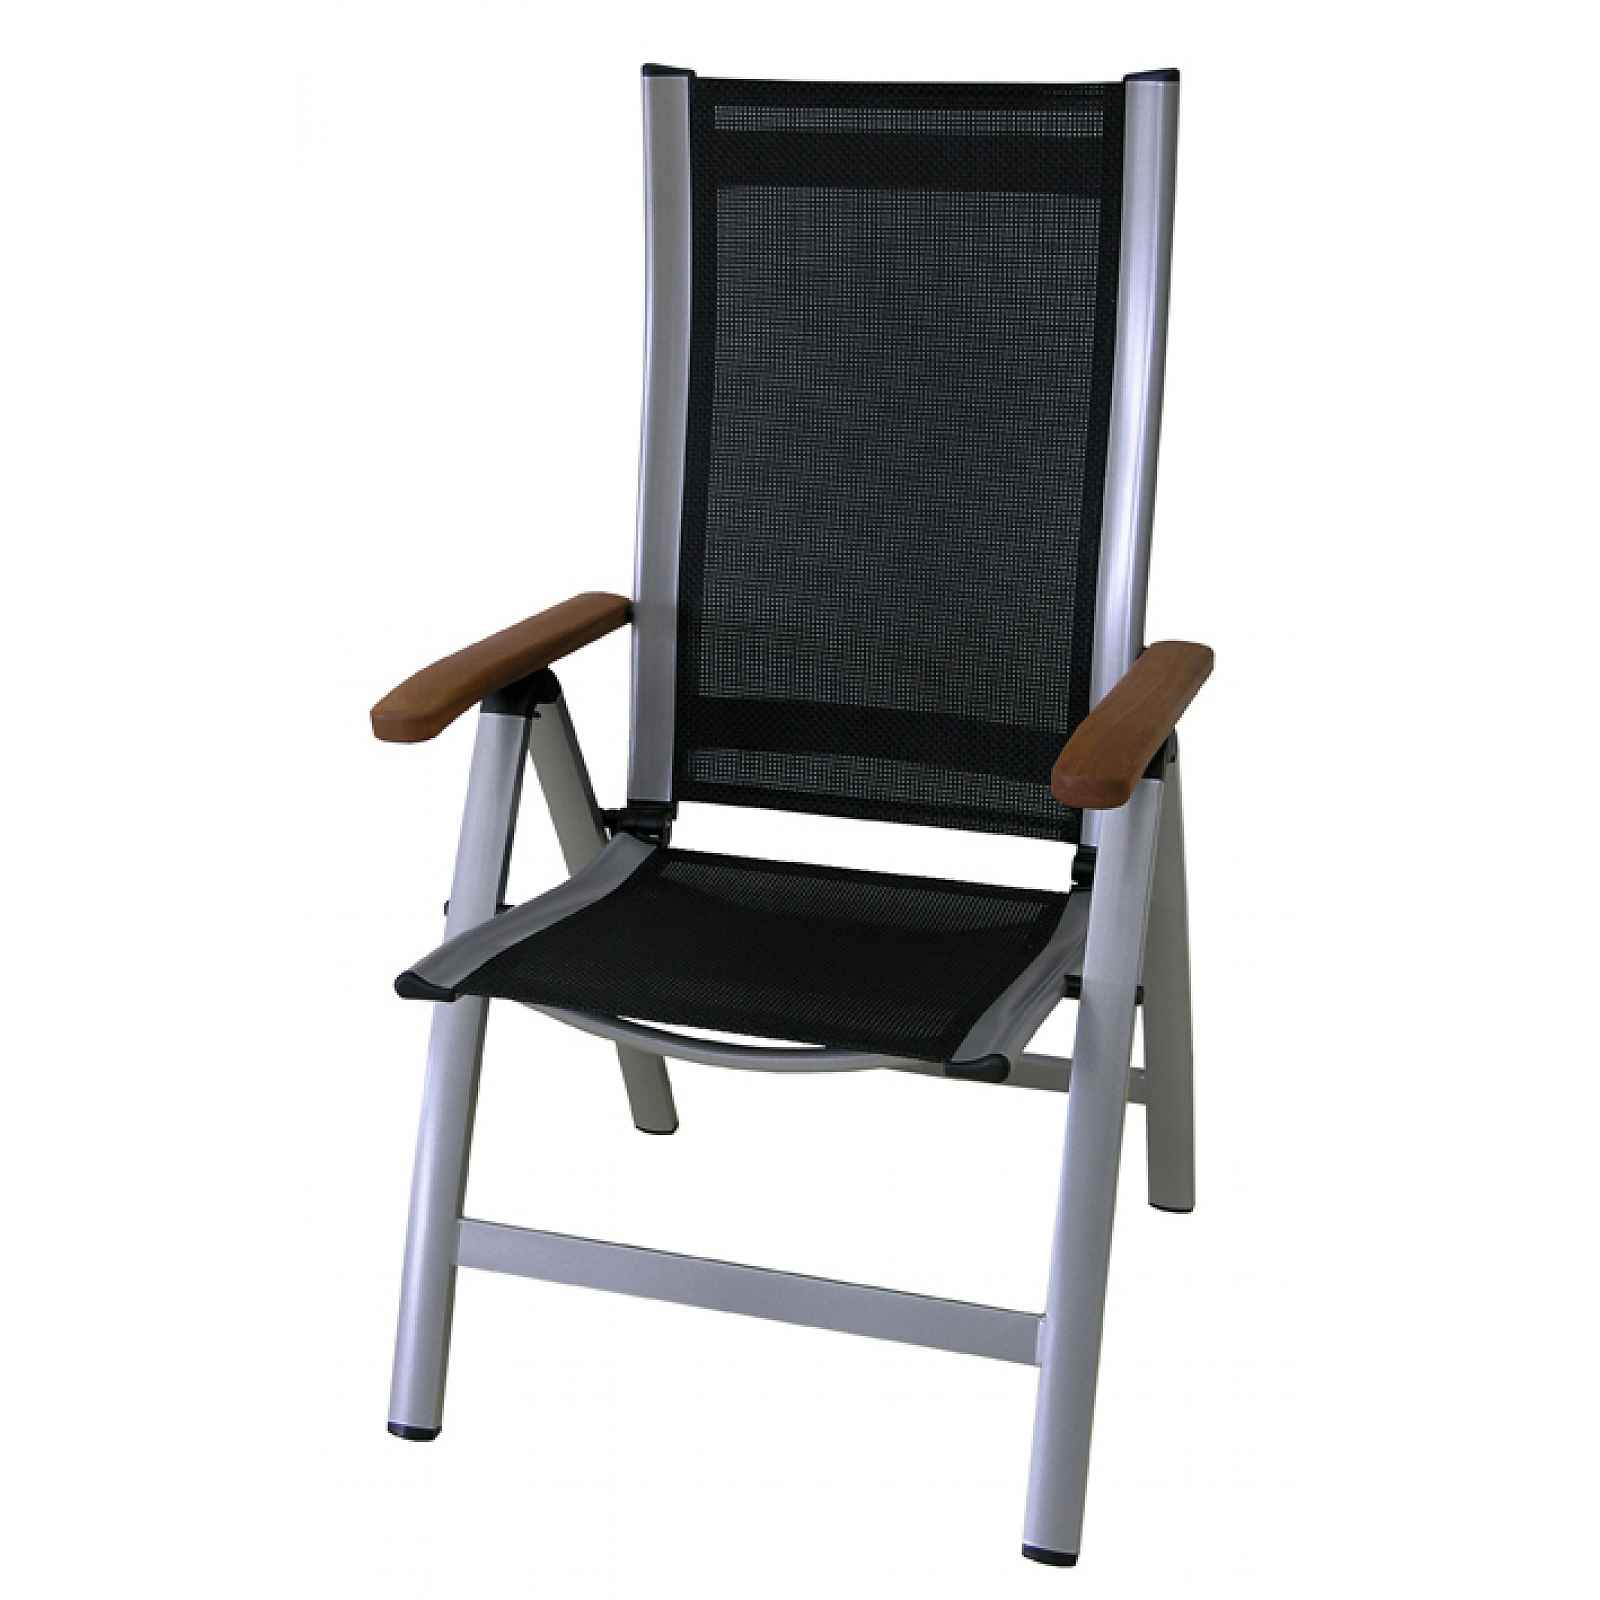 ASS COMFORT poloh. židle - černé + stříbrná Sun garden